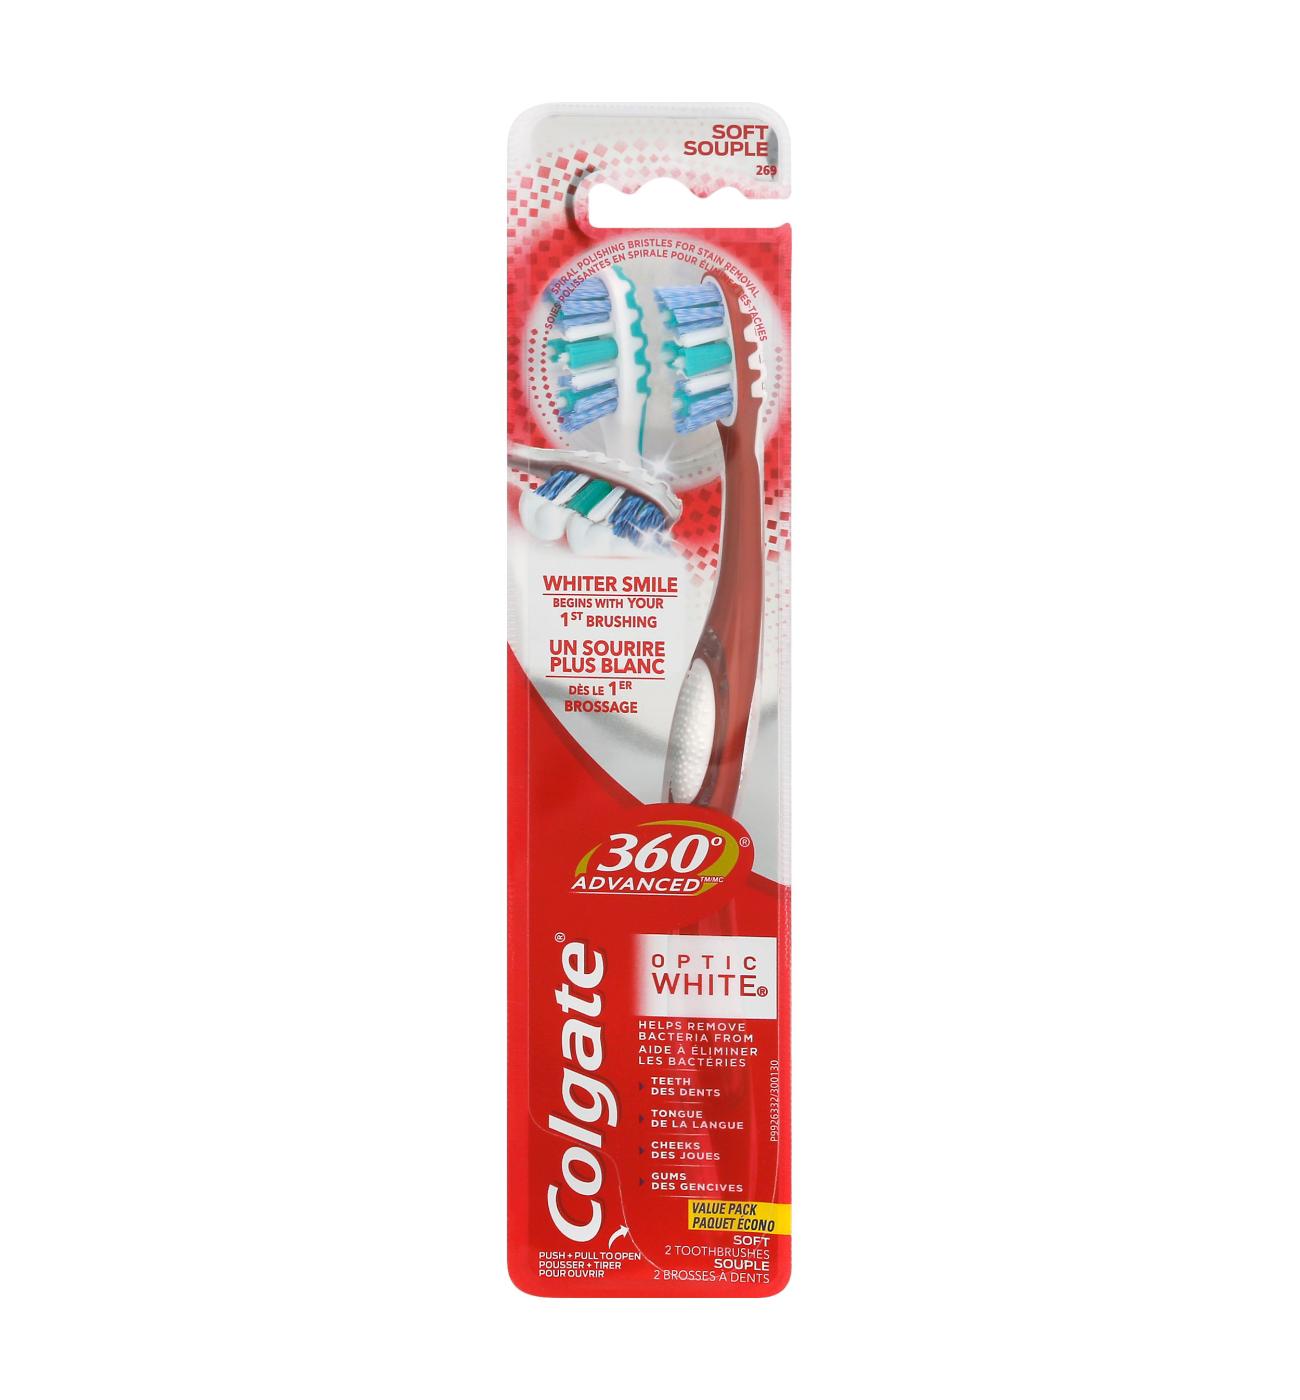 Colgate 360 Advanced Optic White Toothbrush; image 1 of 7